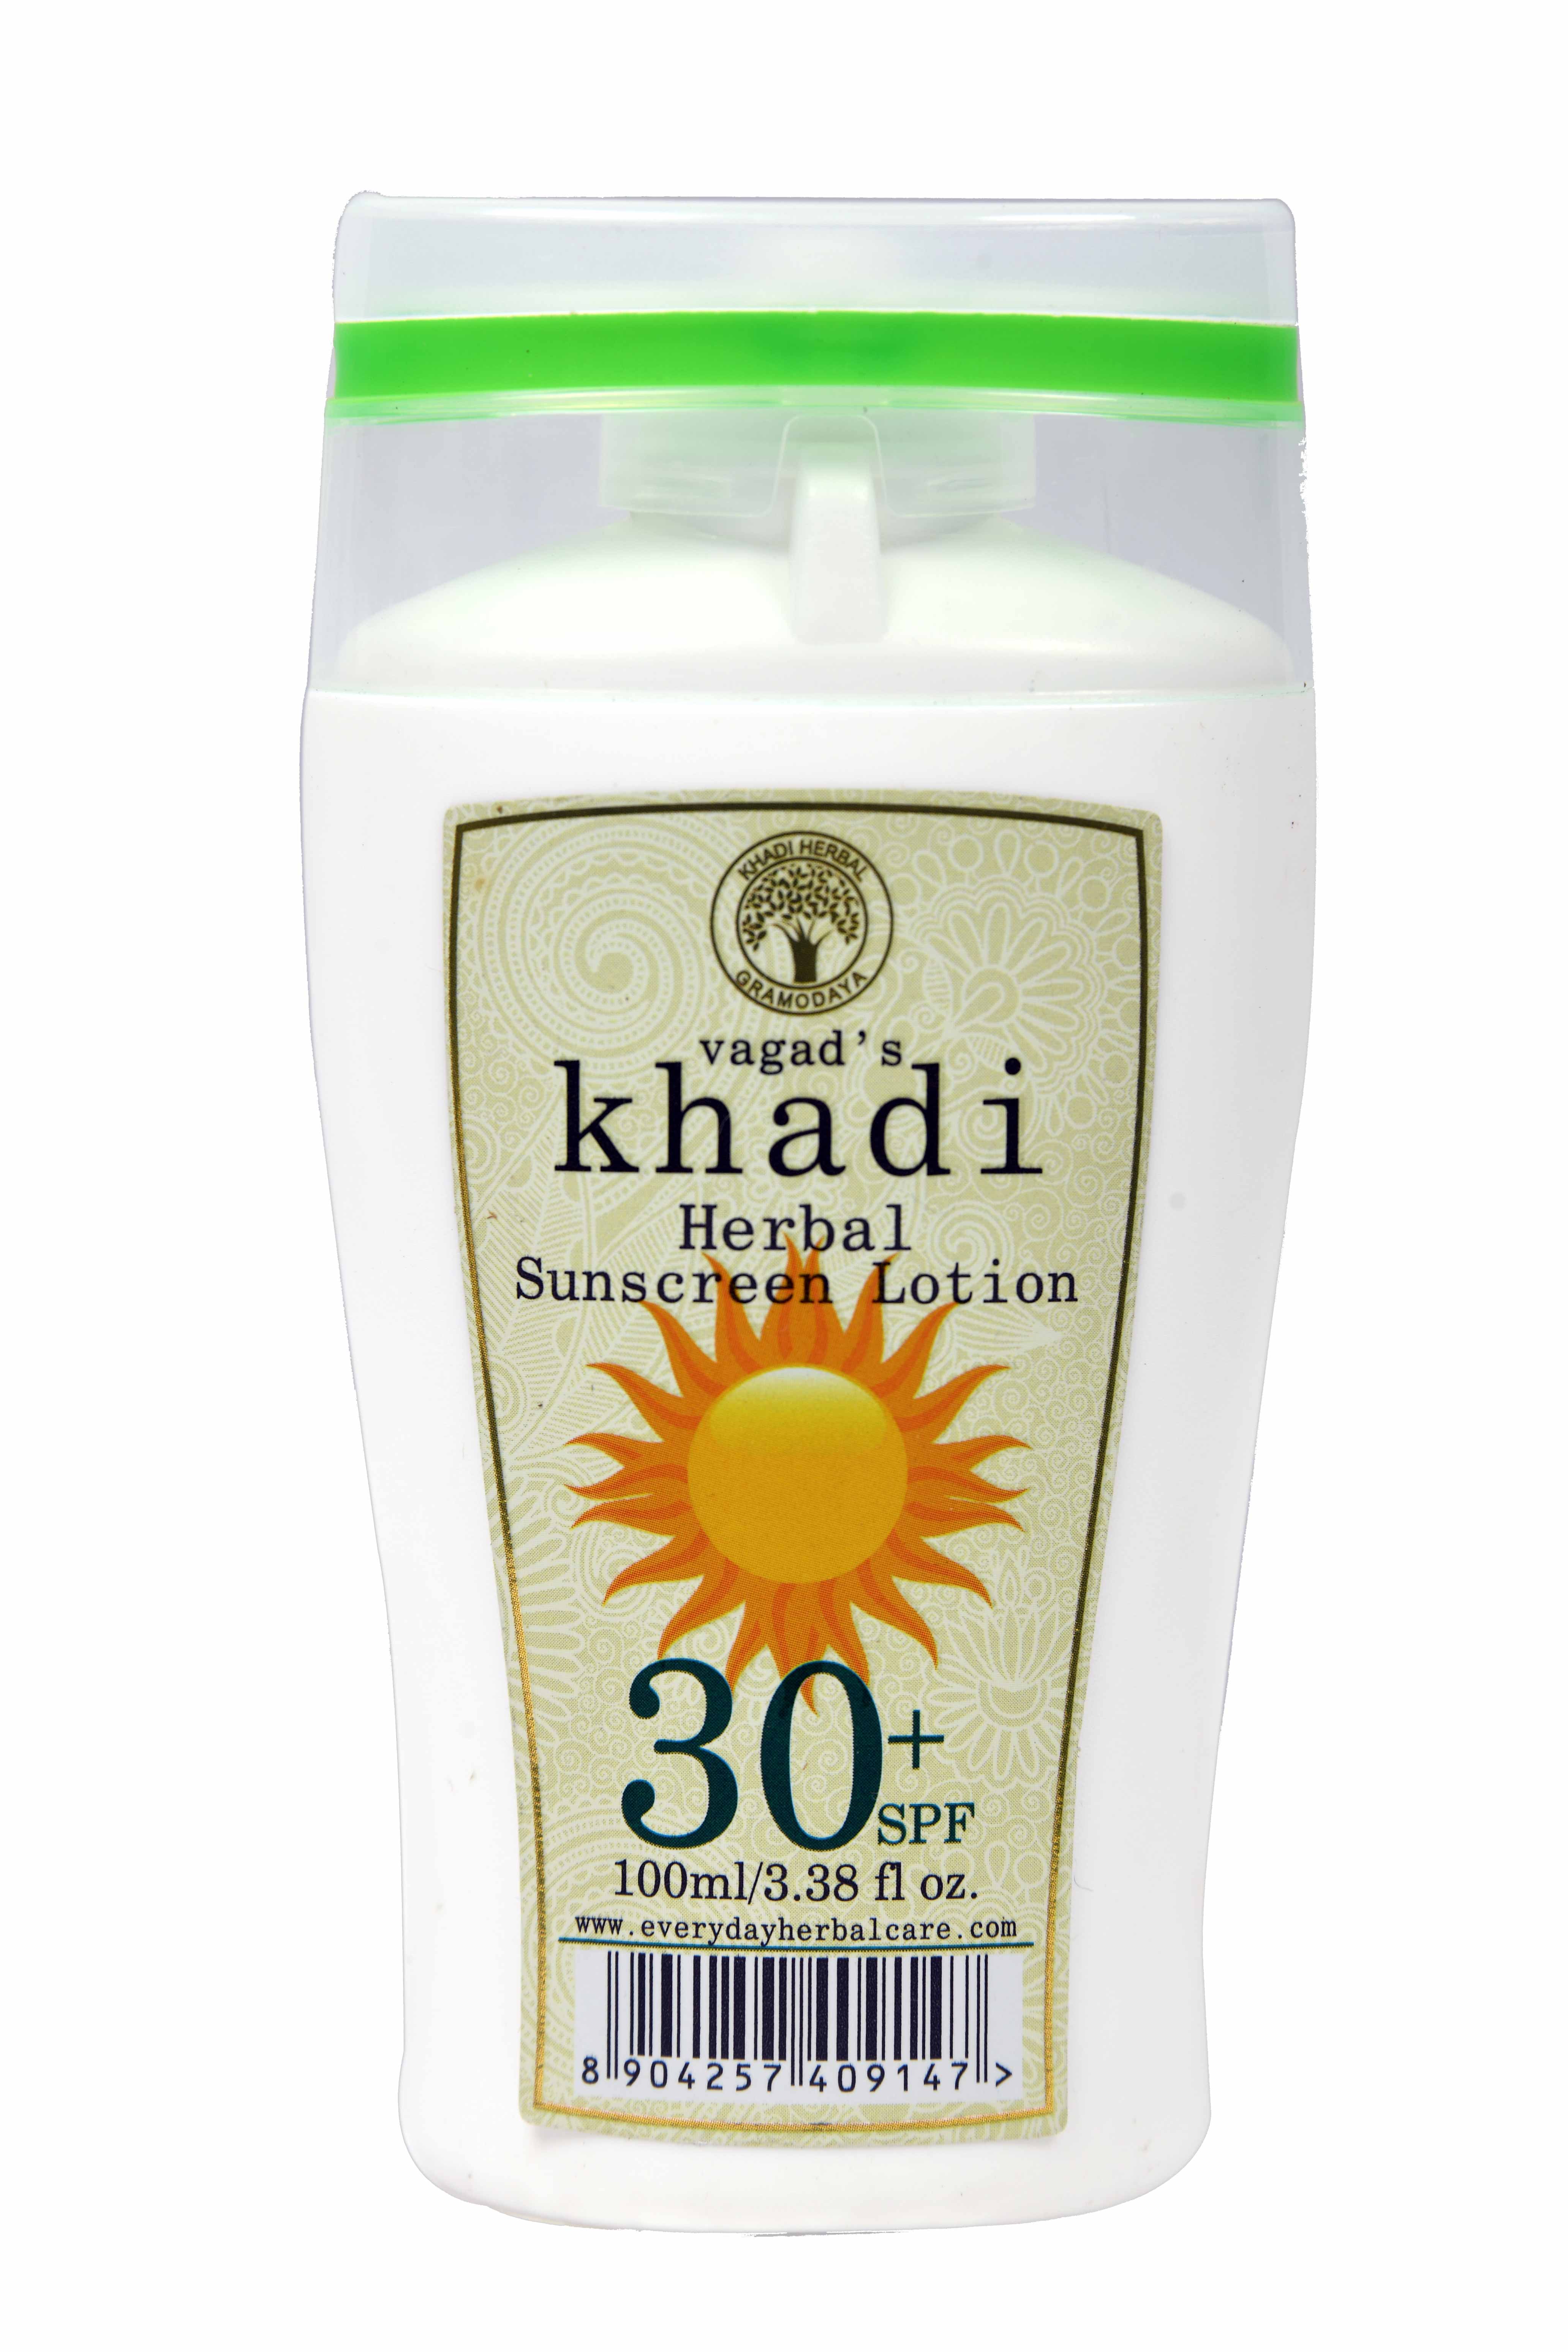 Buy Vagad's Khadi Spf 30 Sunscreen Lotion at Best Price Online